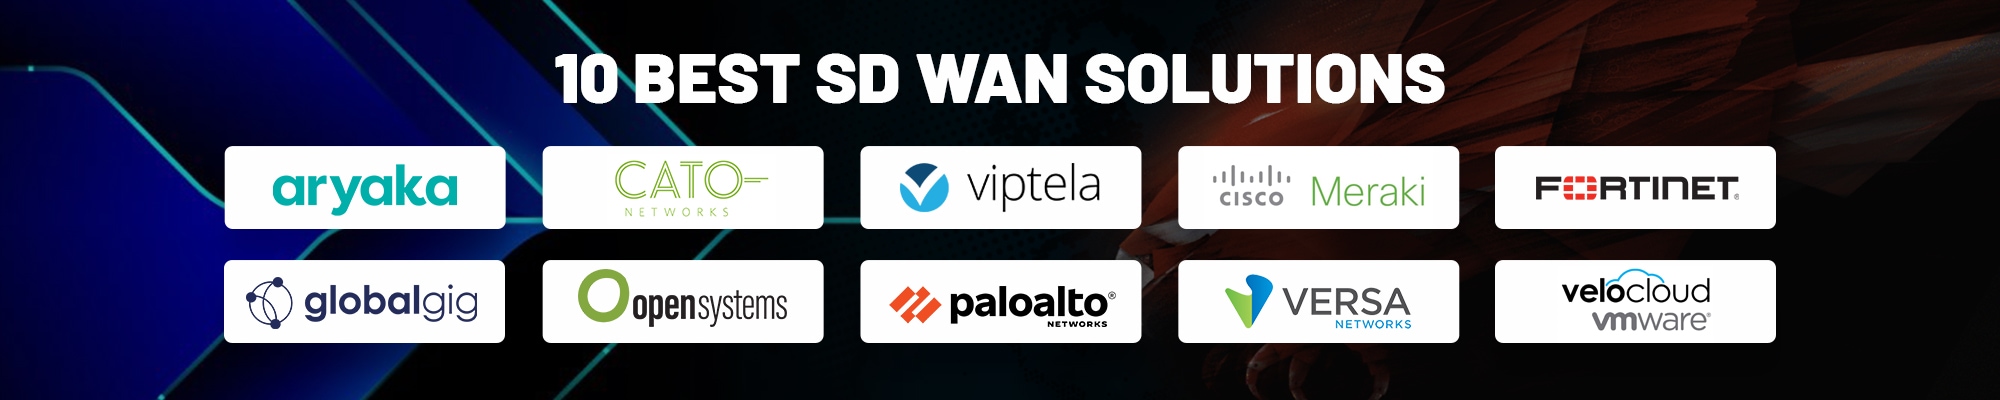 10 Best SD WAN Solutions